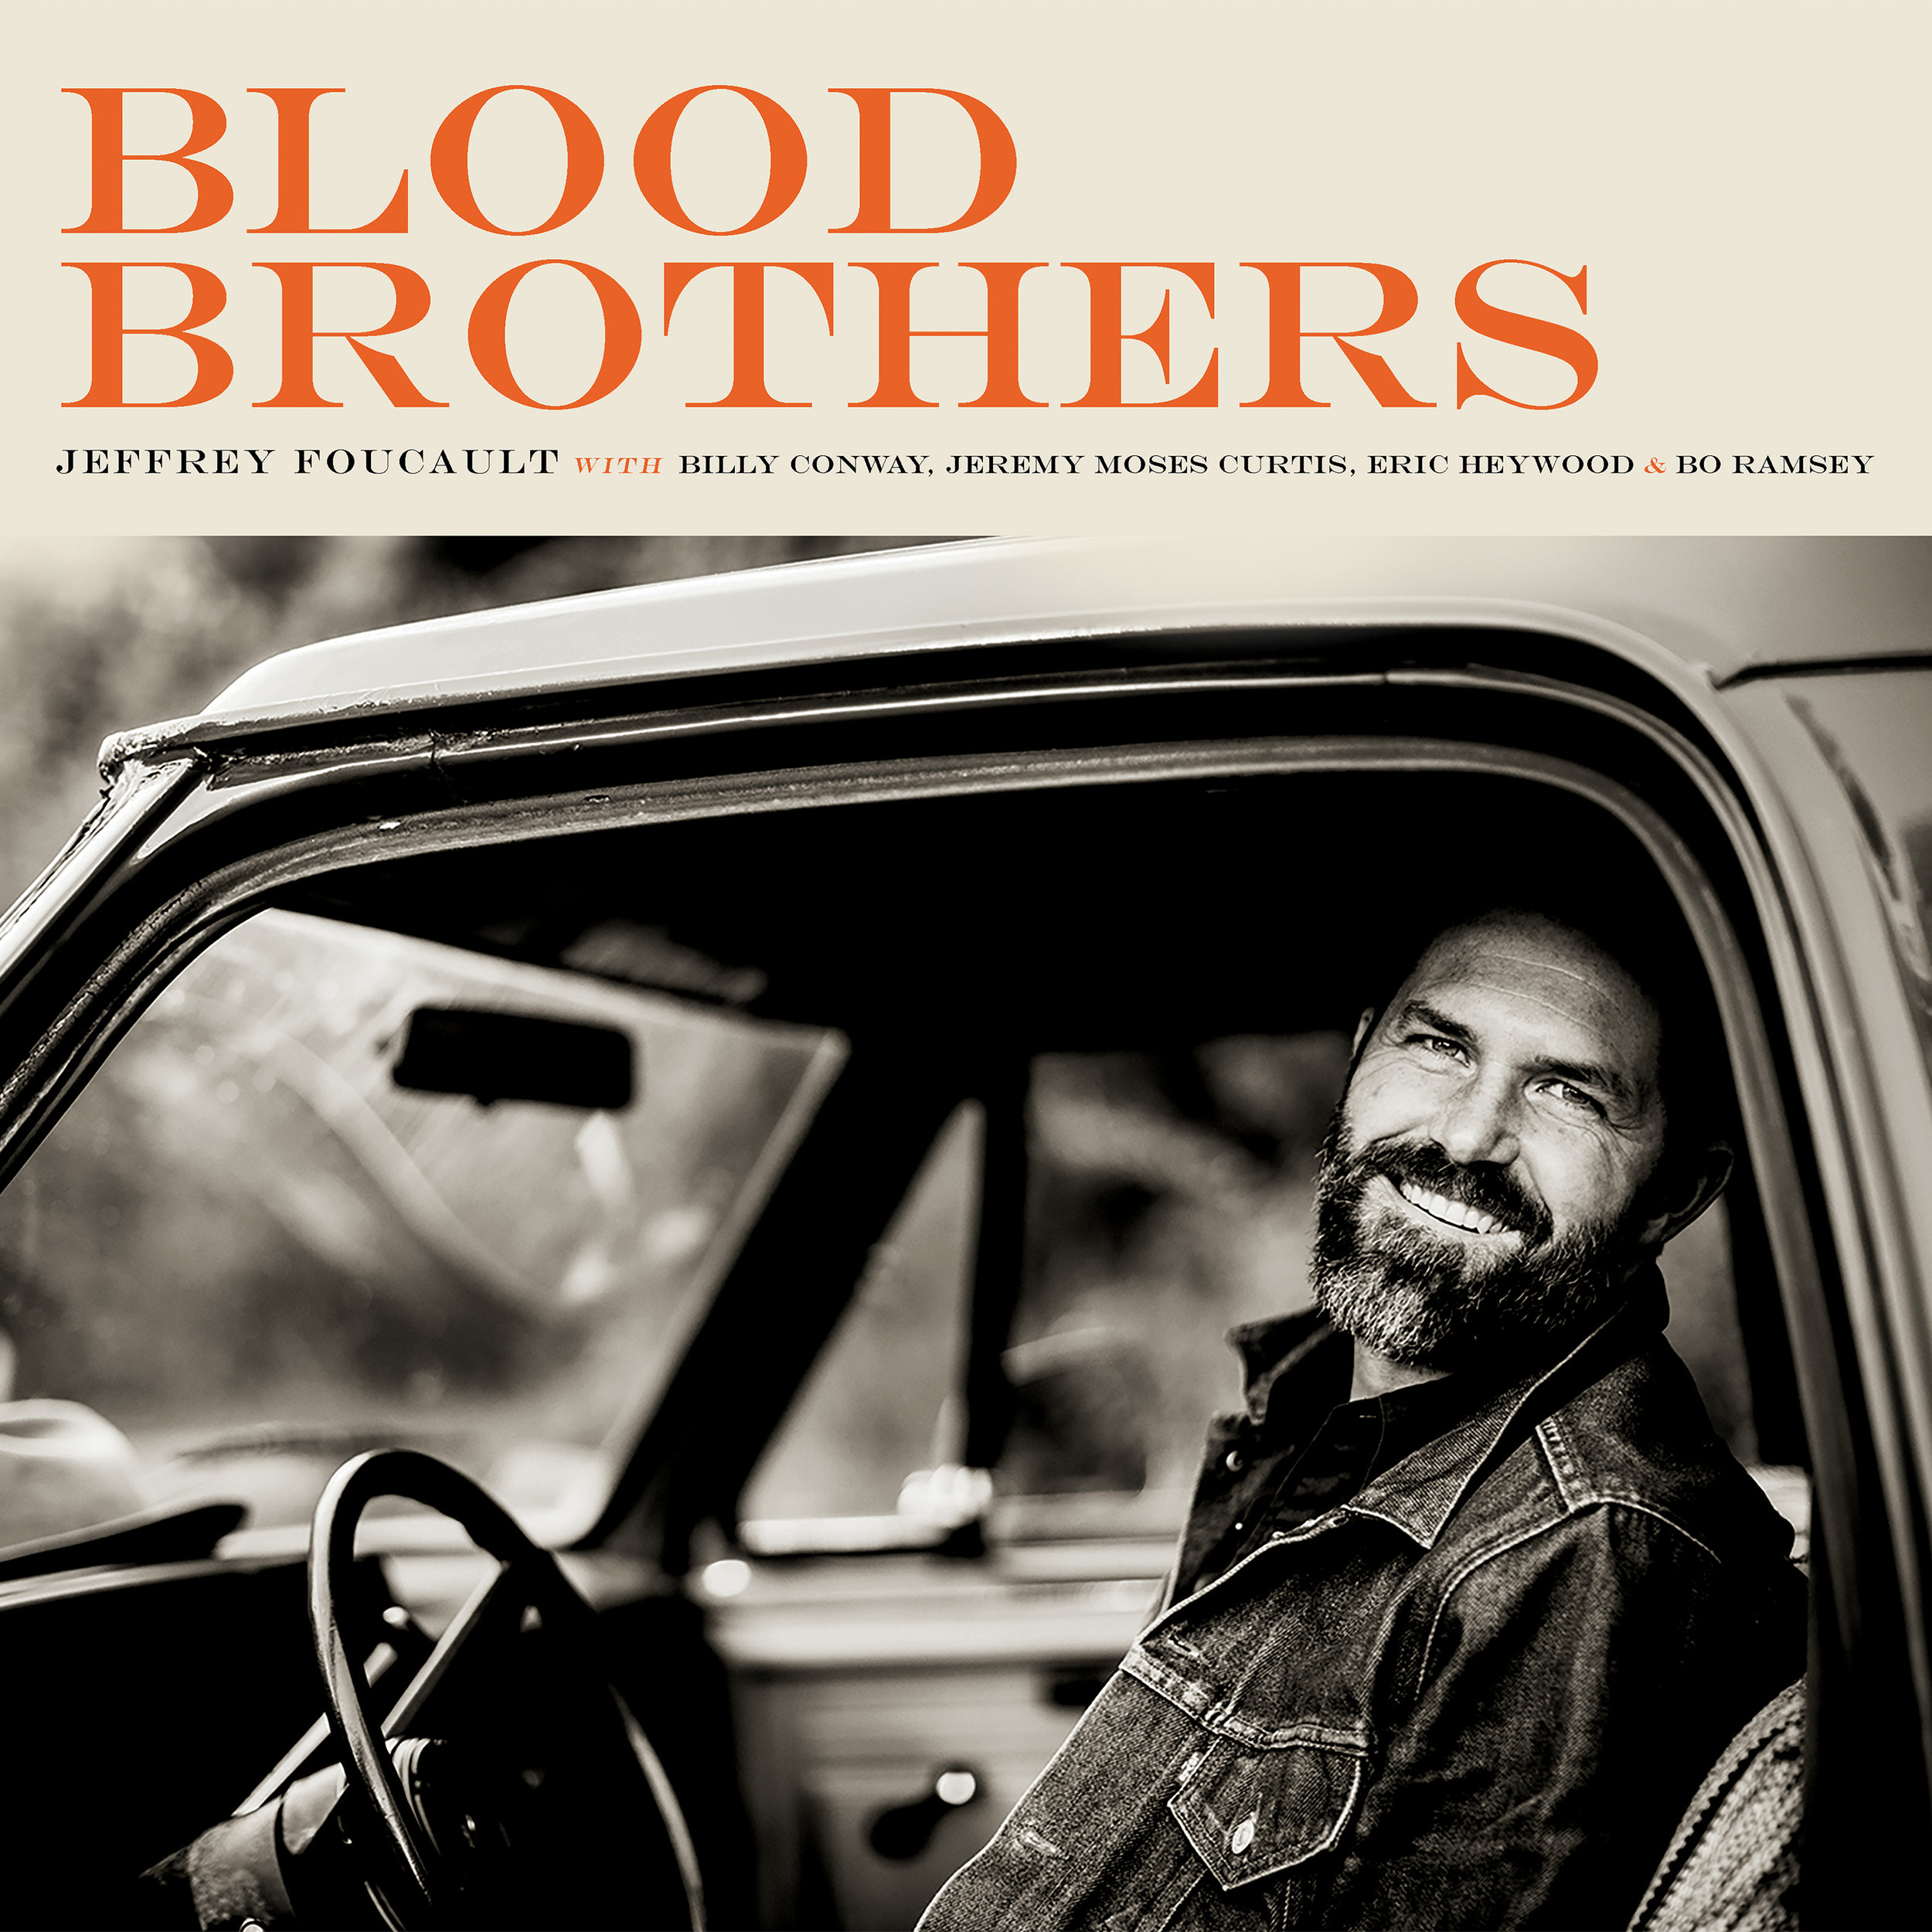 BLOOD BROTHERS VINYL COVER RGB 300dpi 3Kx3K PIXELS.jpg